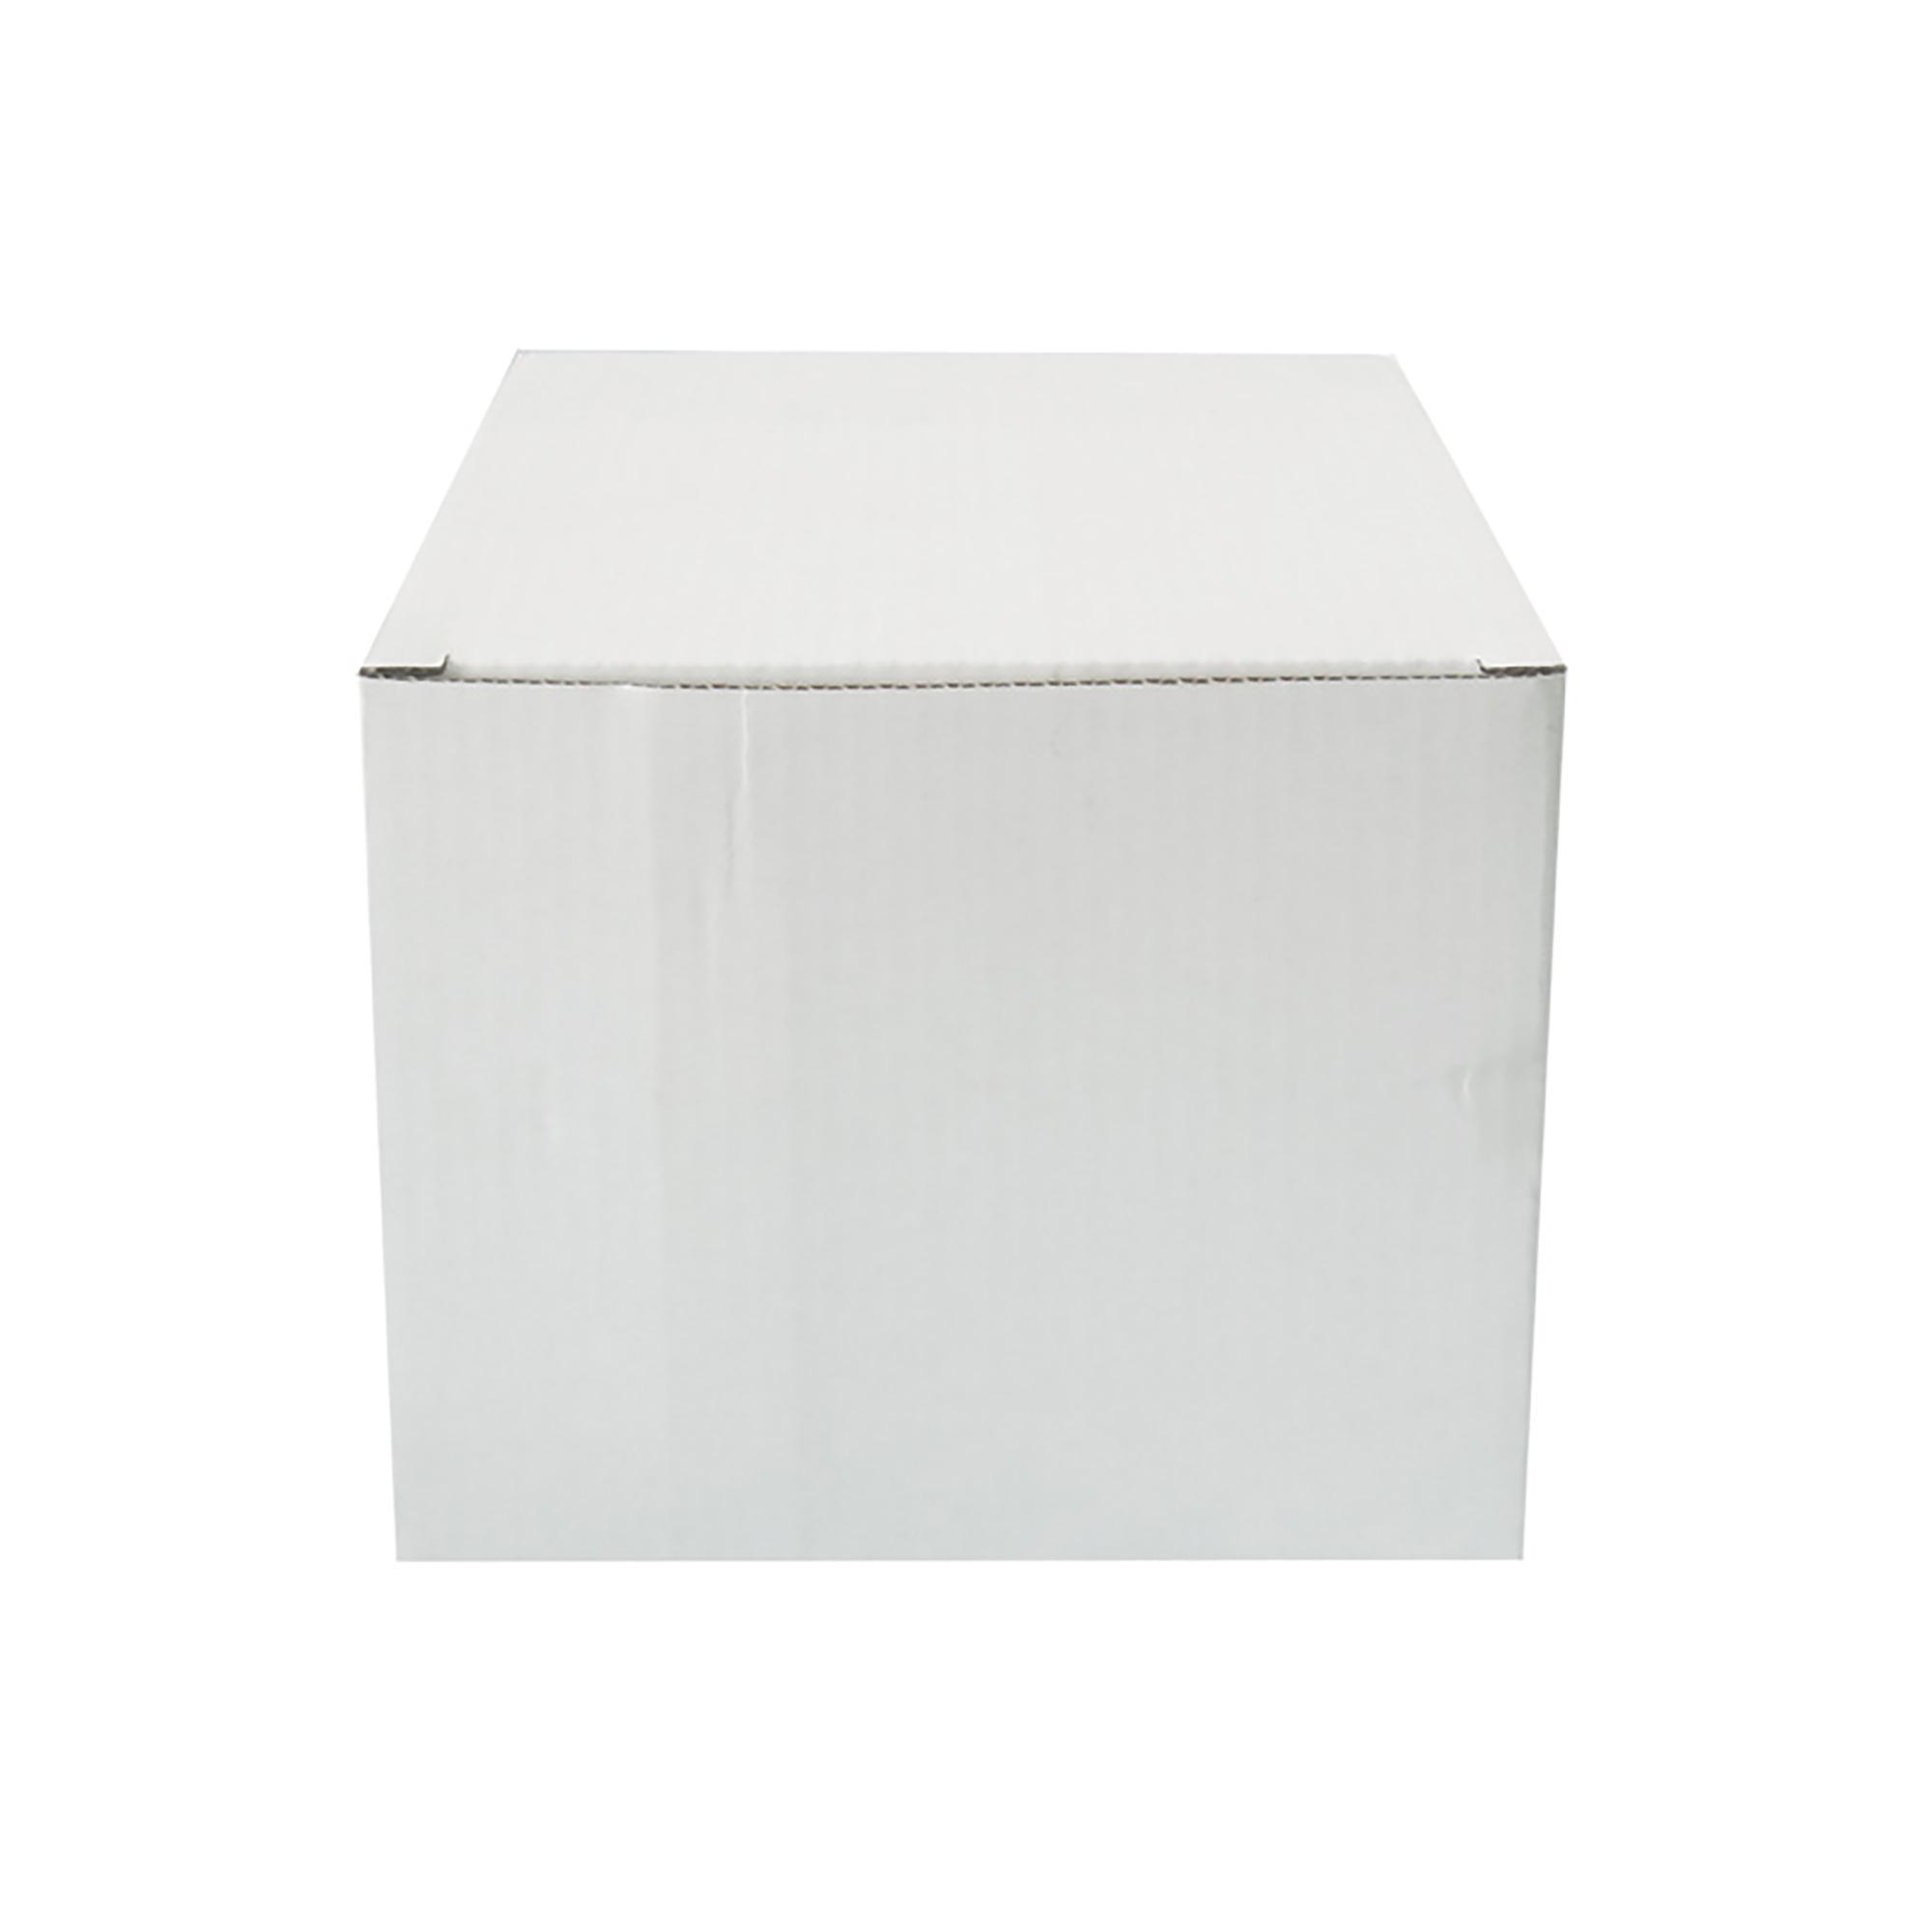 Коробка для кружки, цвет белый, фото 1